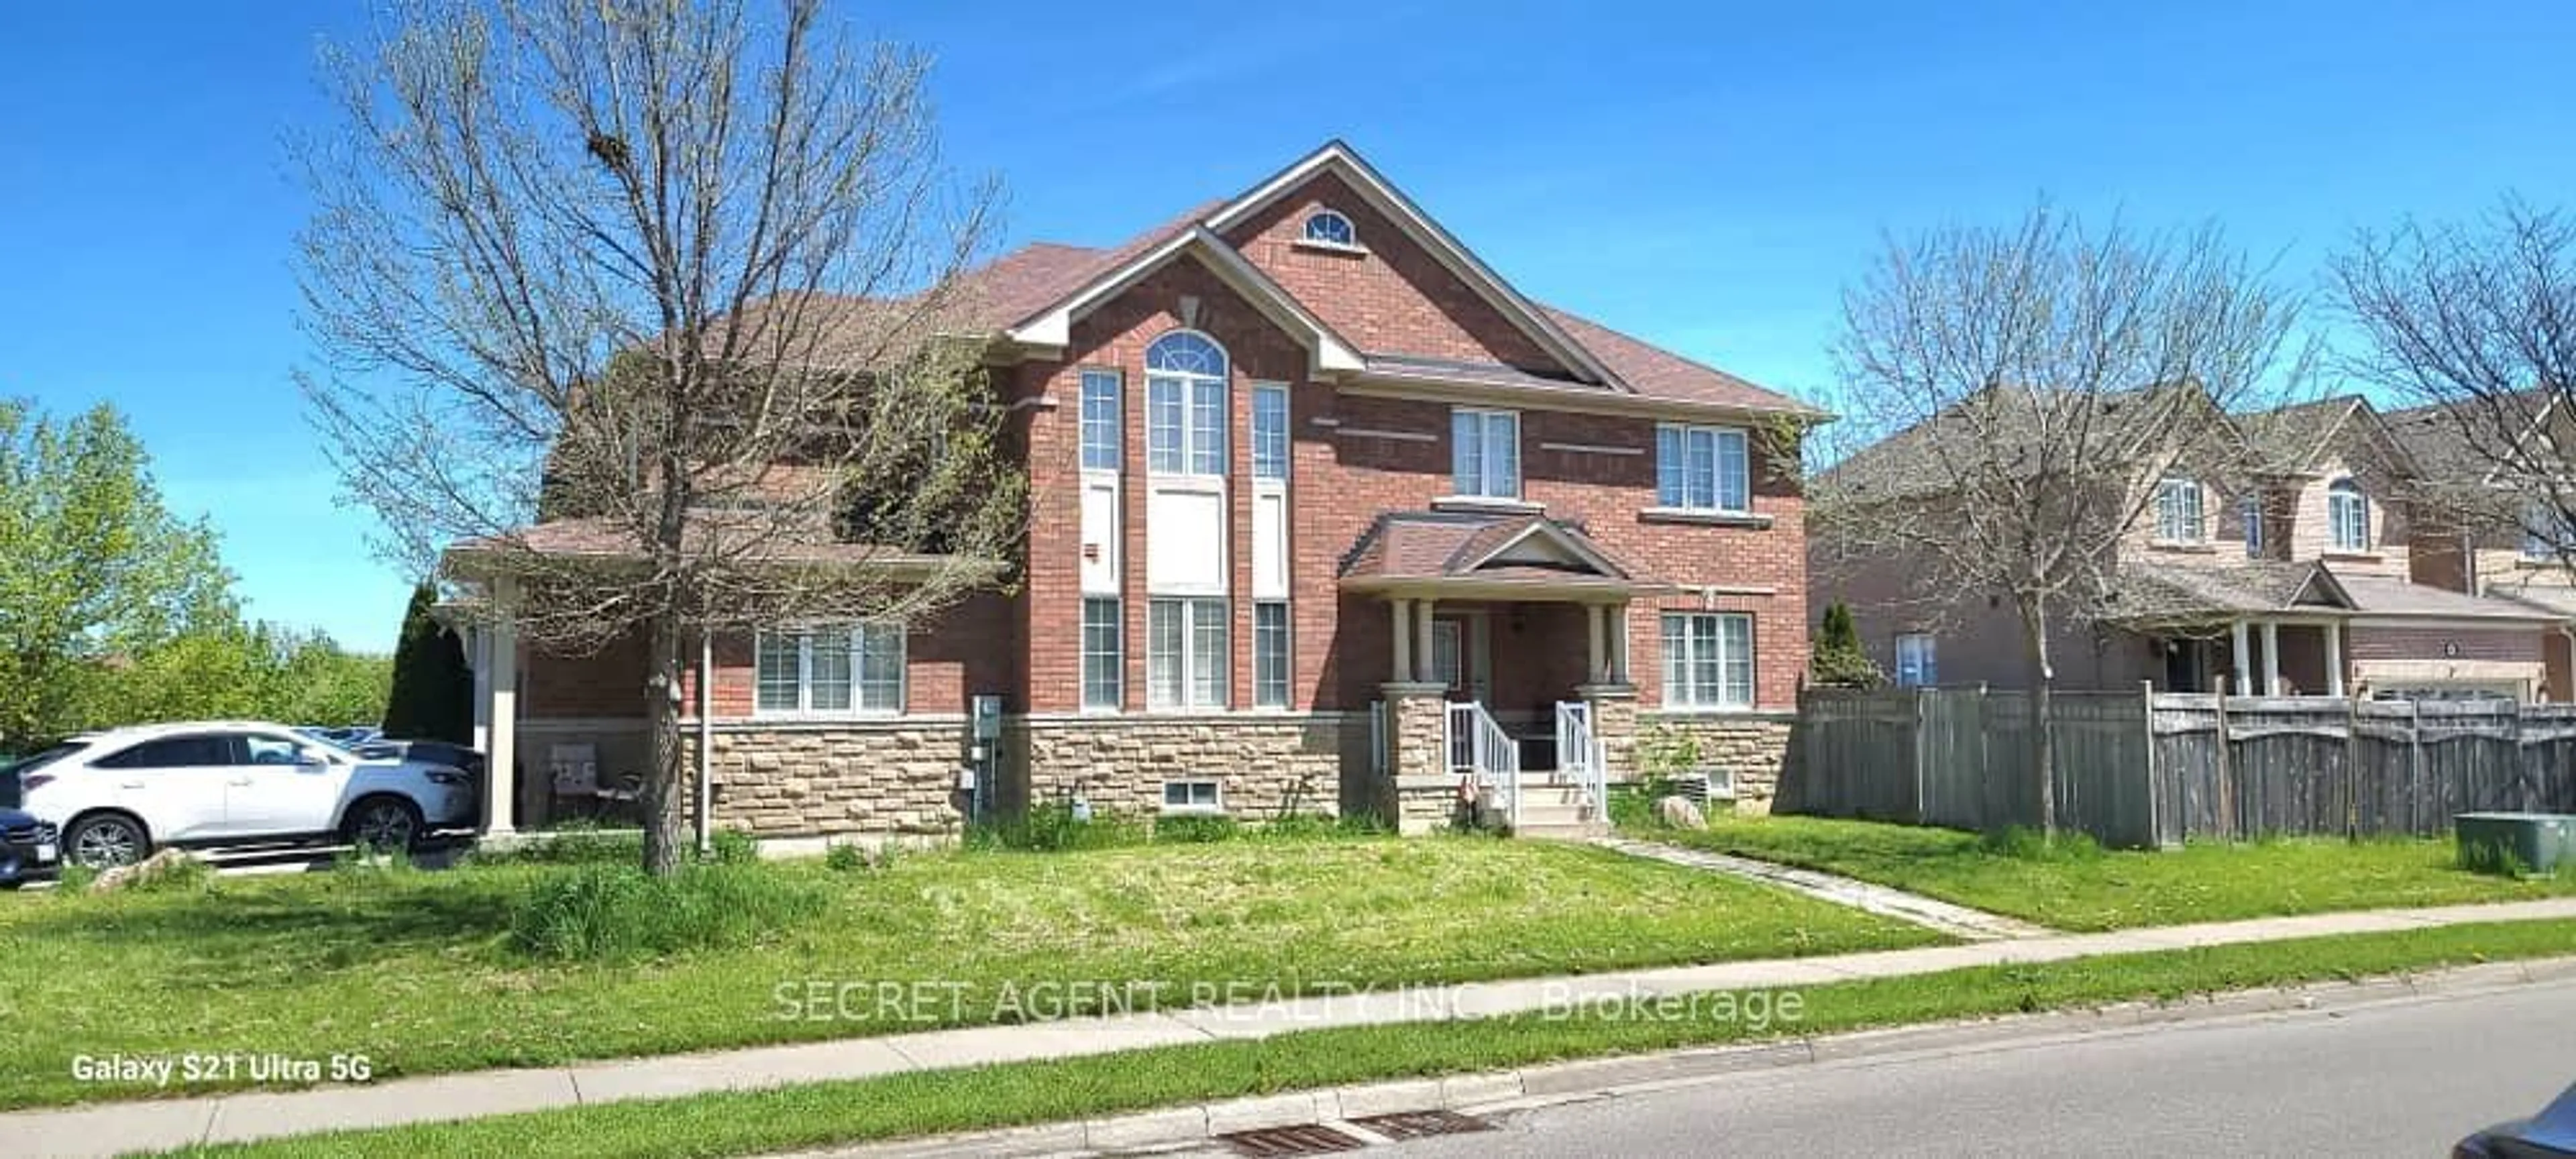 Home with brick exterior material for 138 Zia Dodda Cres, Brampton Ontario L6P 1T4